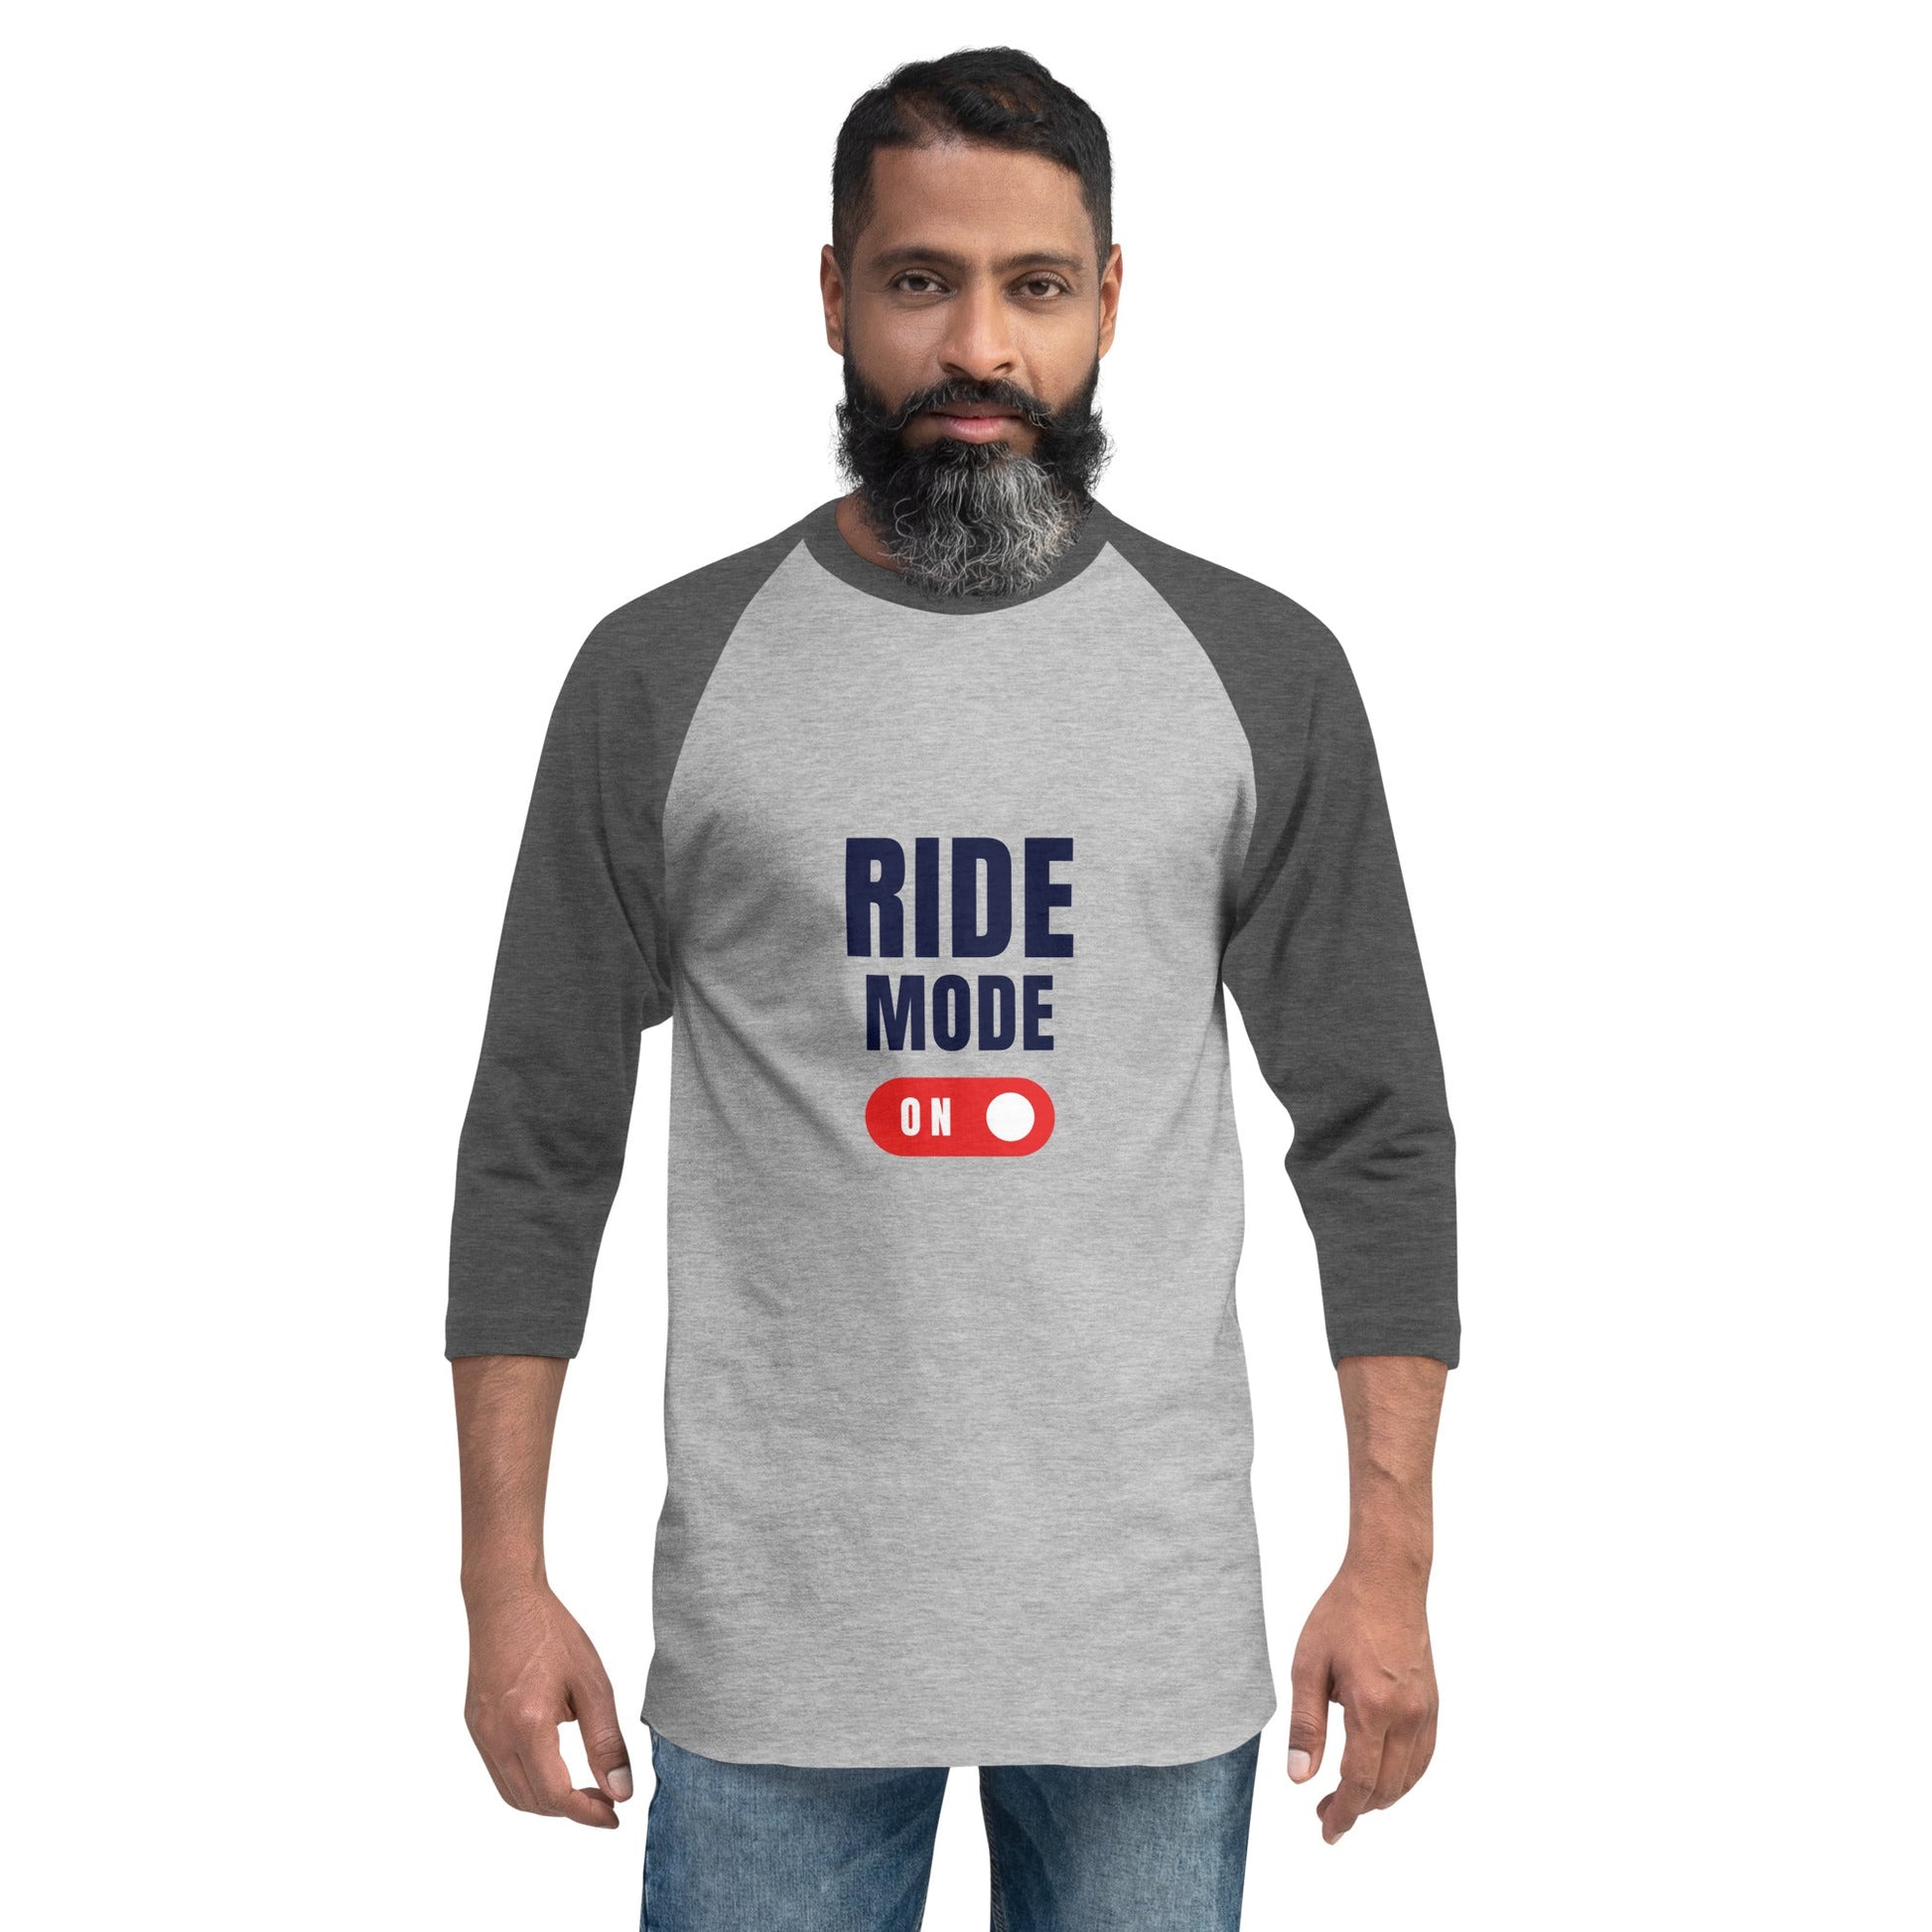 3/4 Sleeve Raglan Shirt - Ride Mode On - The Vandi Company